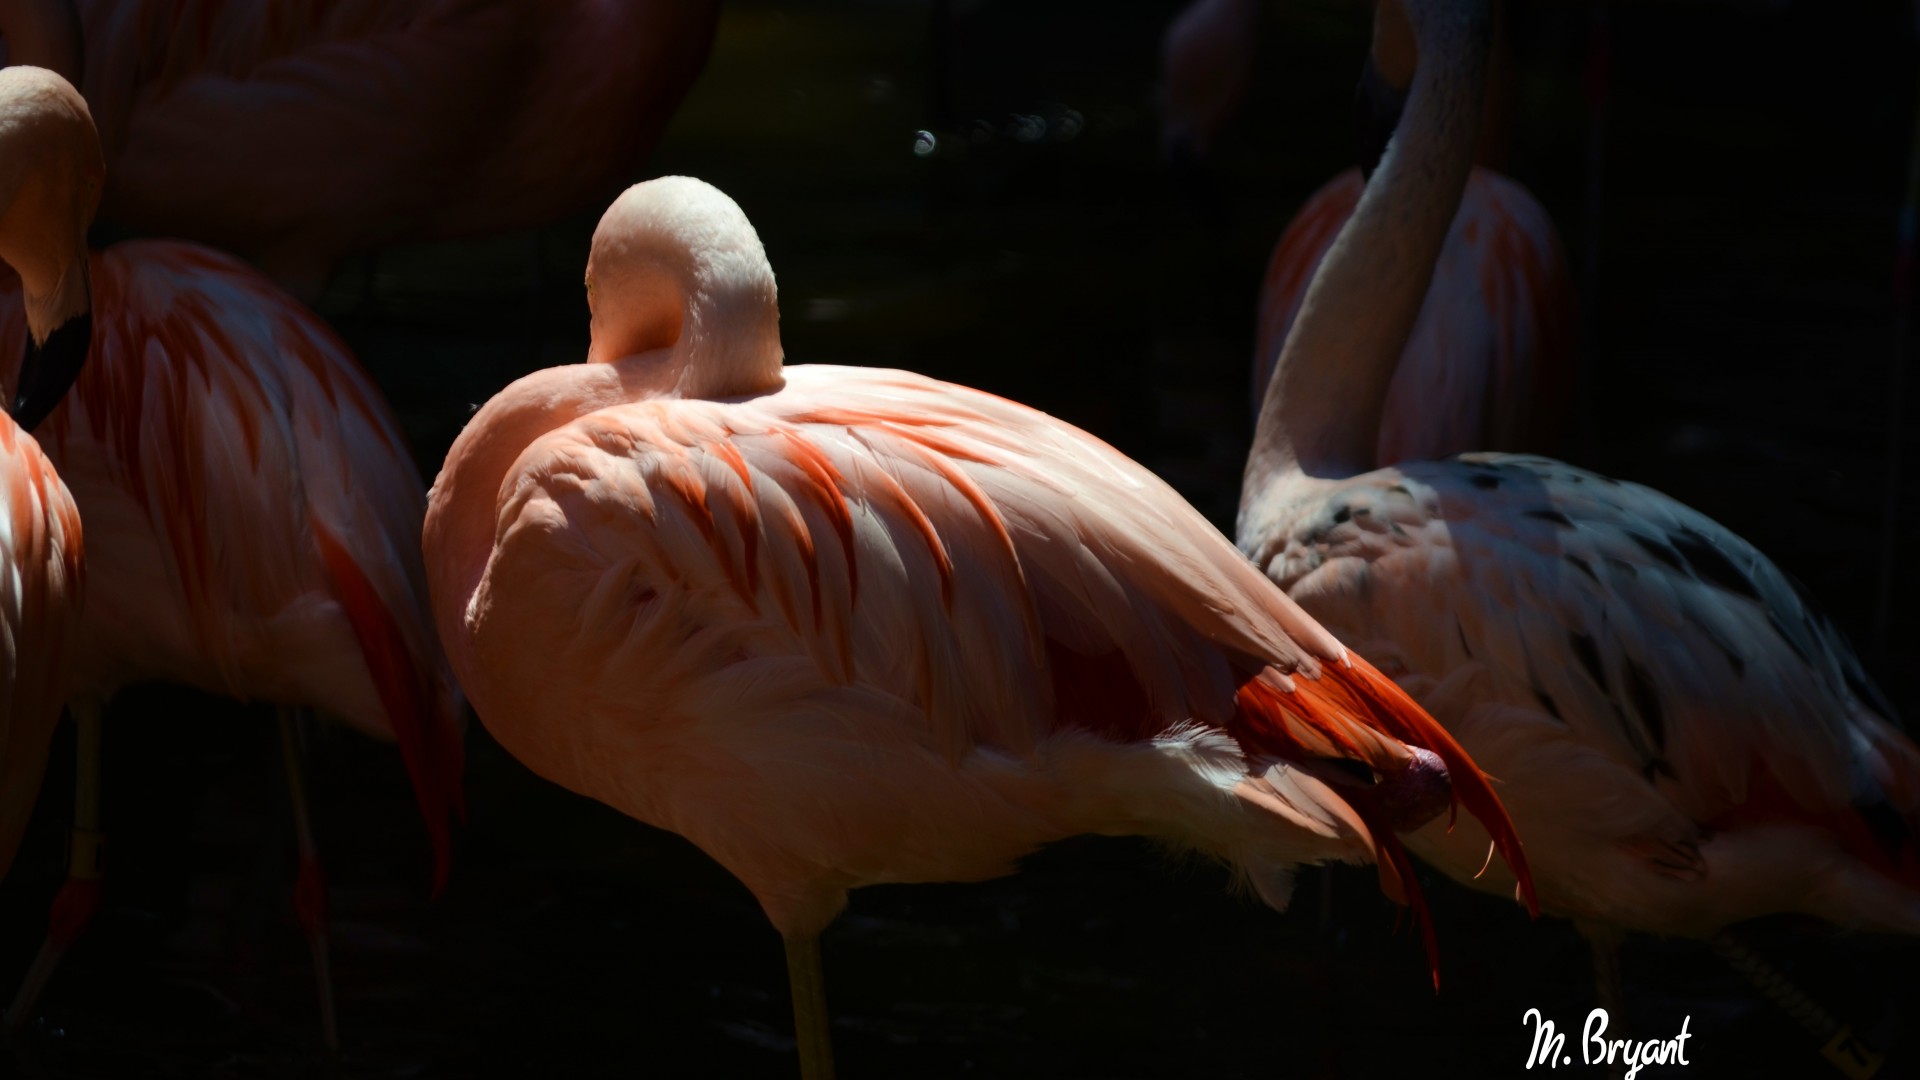 Flamingo, Sun Diego, zoo, bird, red, plumage, tourism, pond (horizontal)